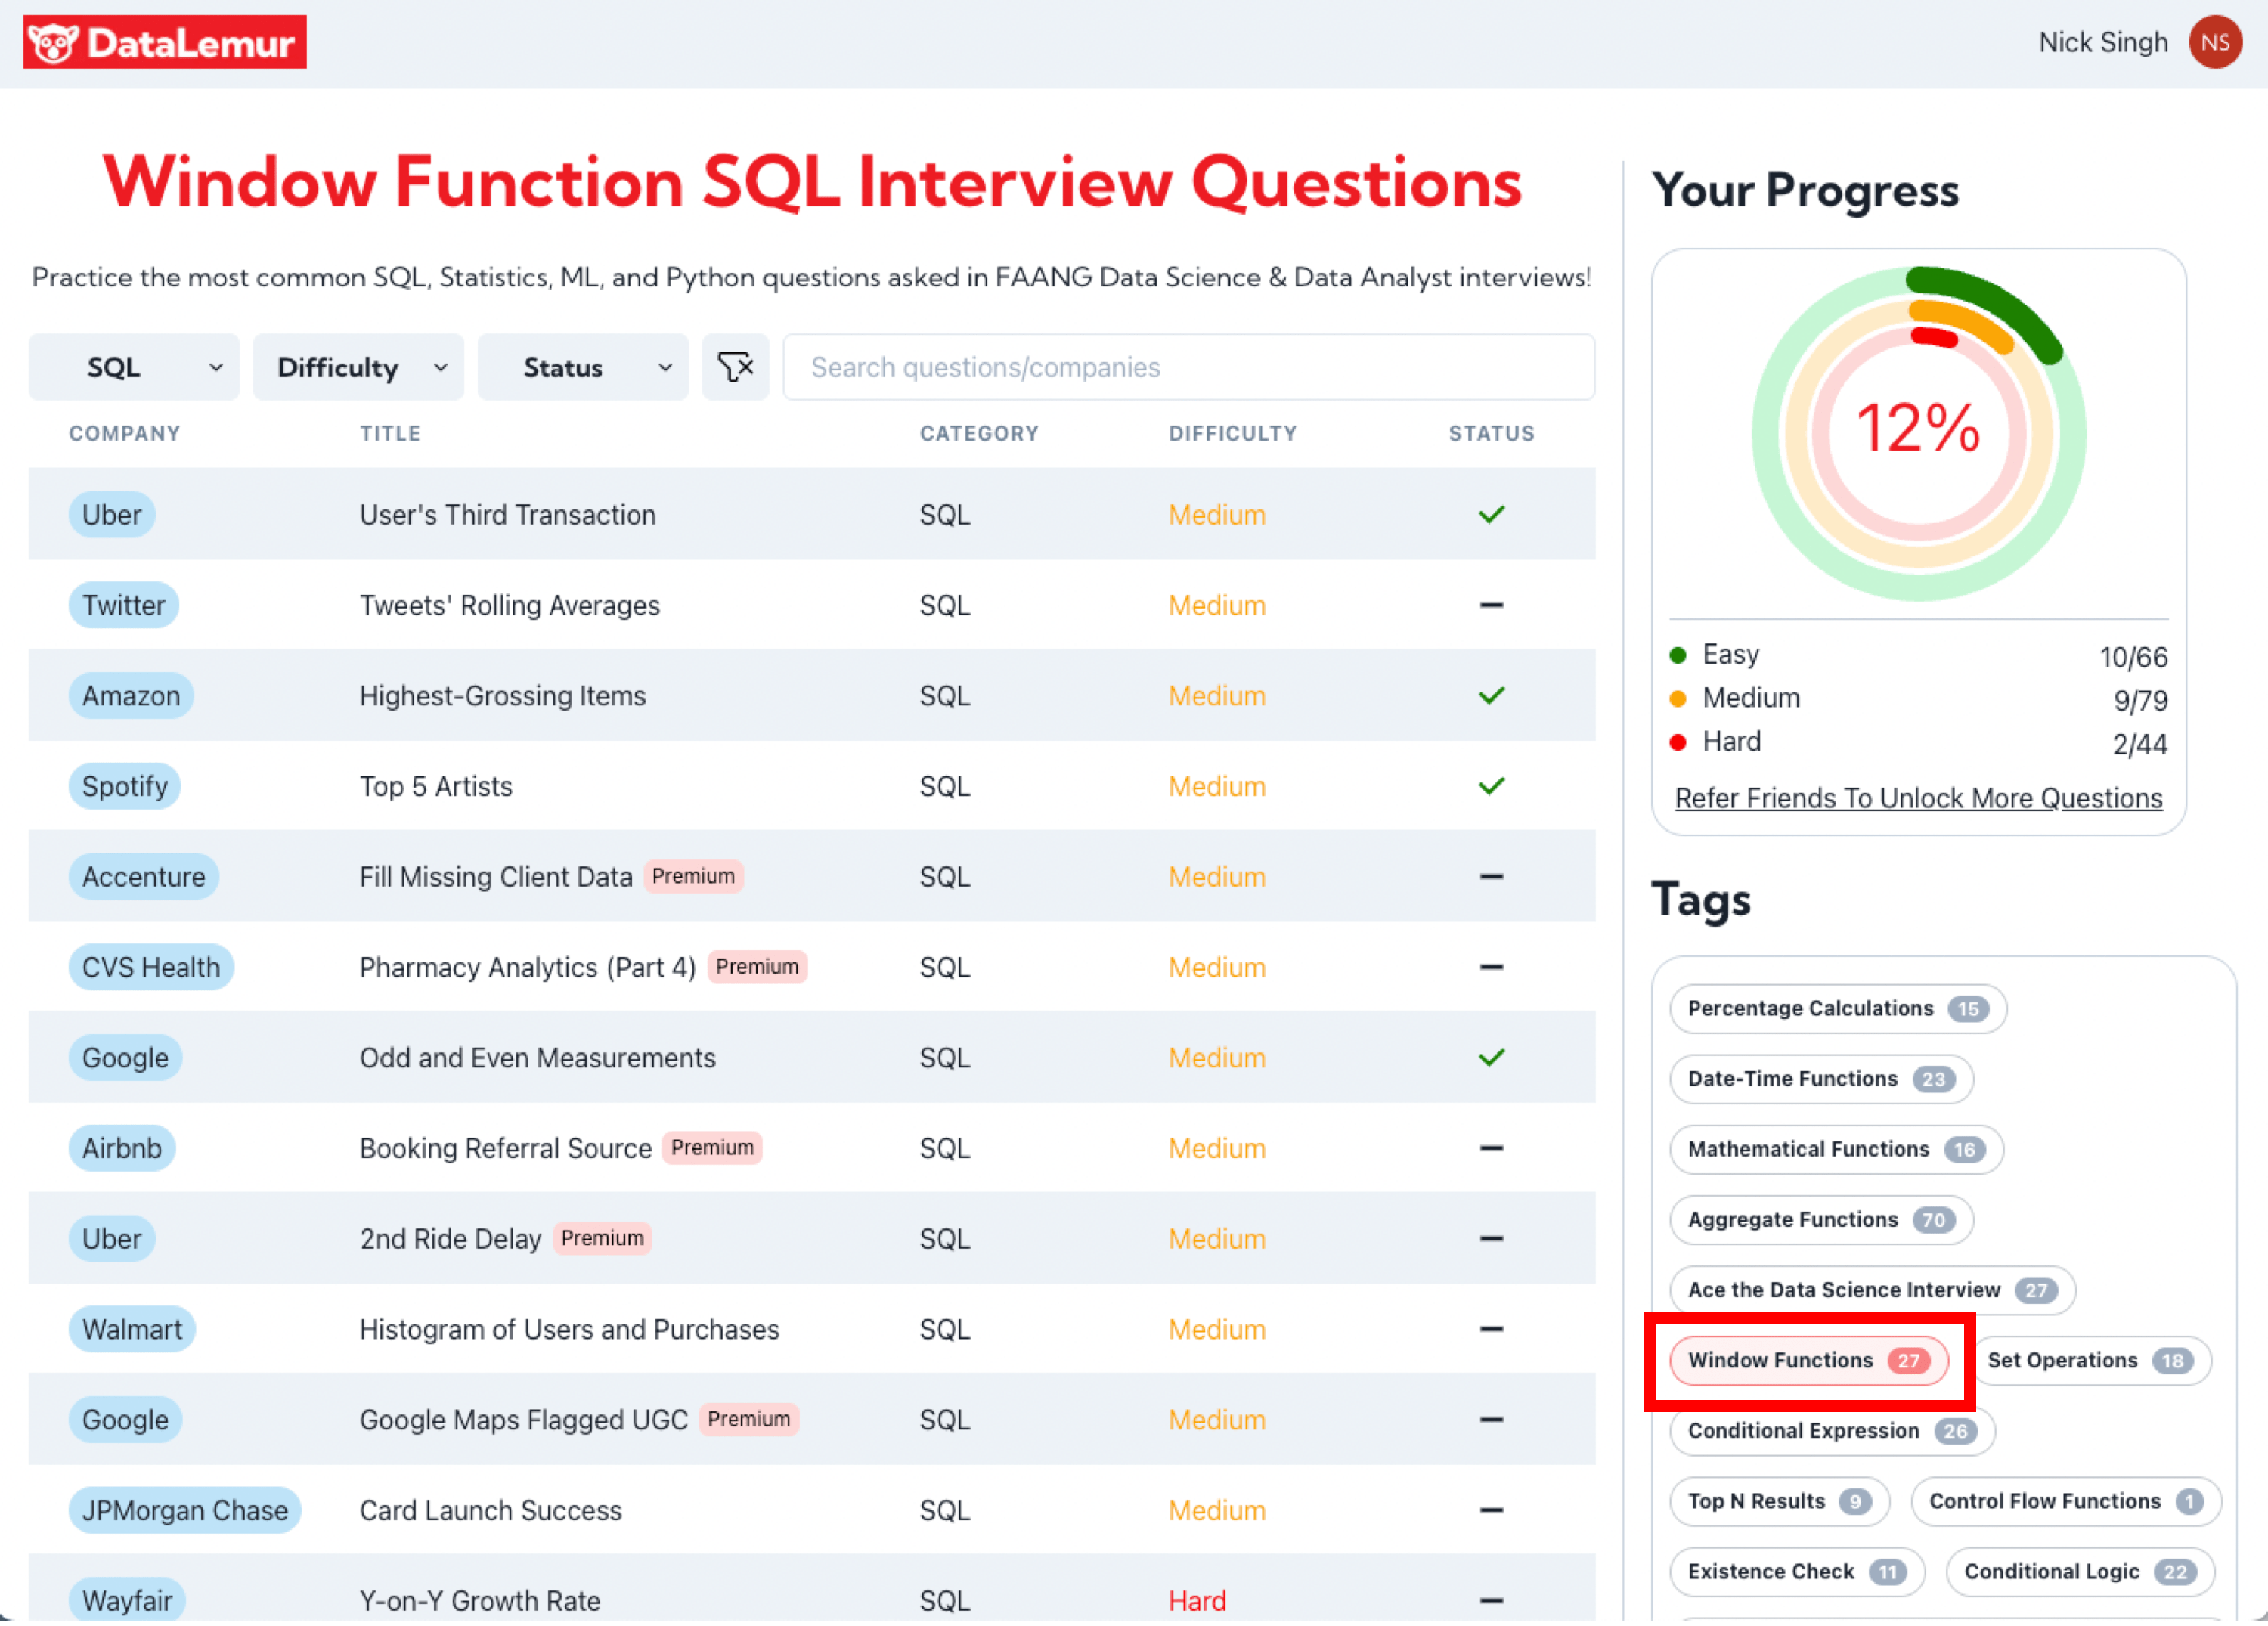 SQL Interview Questions on DataLemur